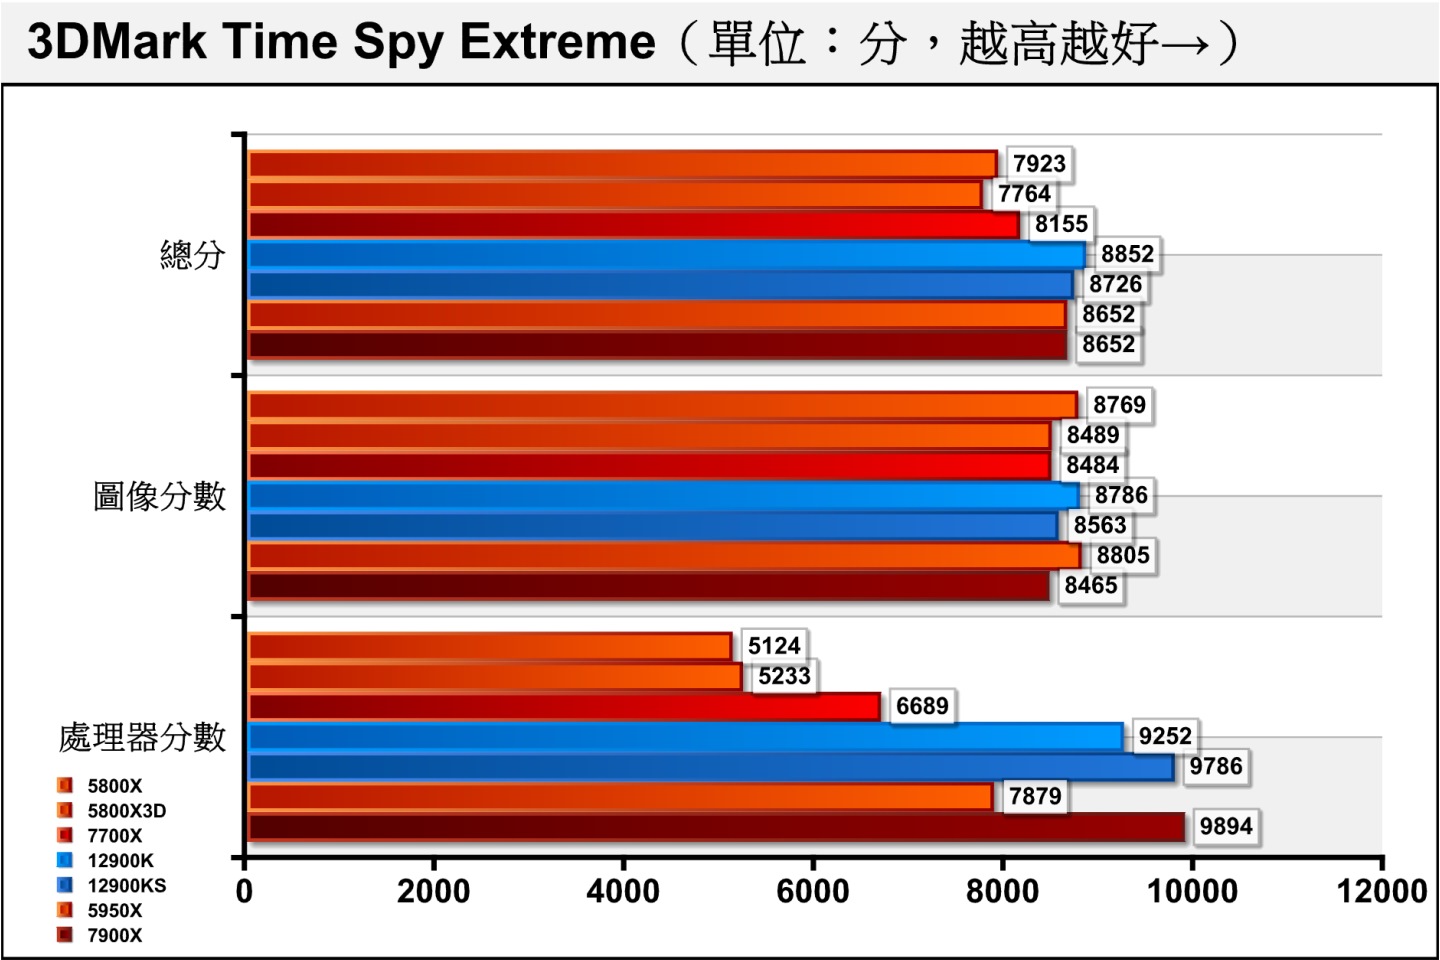 Time Spy Extreme將解析度提升至4K（3840 x 2160）並增加運算負擔，Ryzen 9 7900X的表現能夠超越Core i9-12900KS。